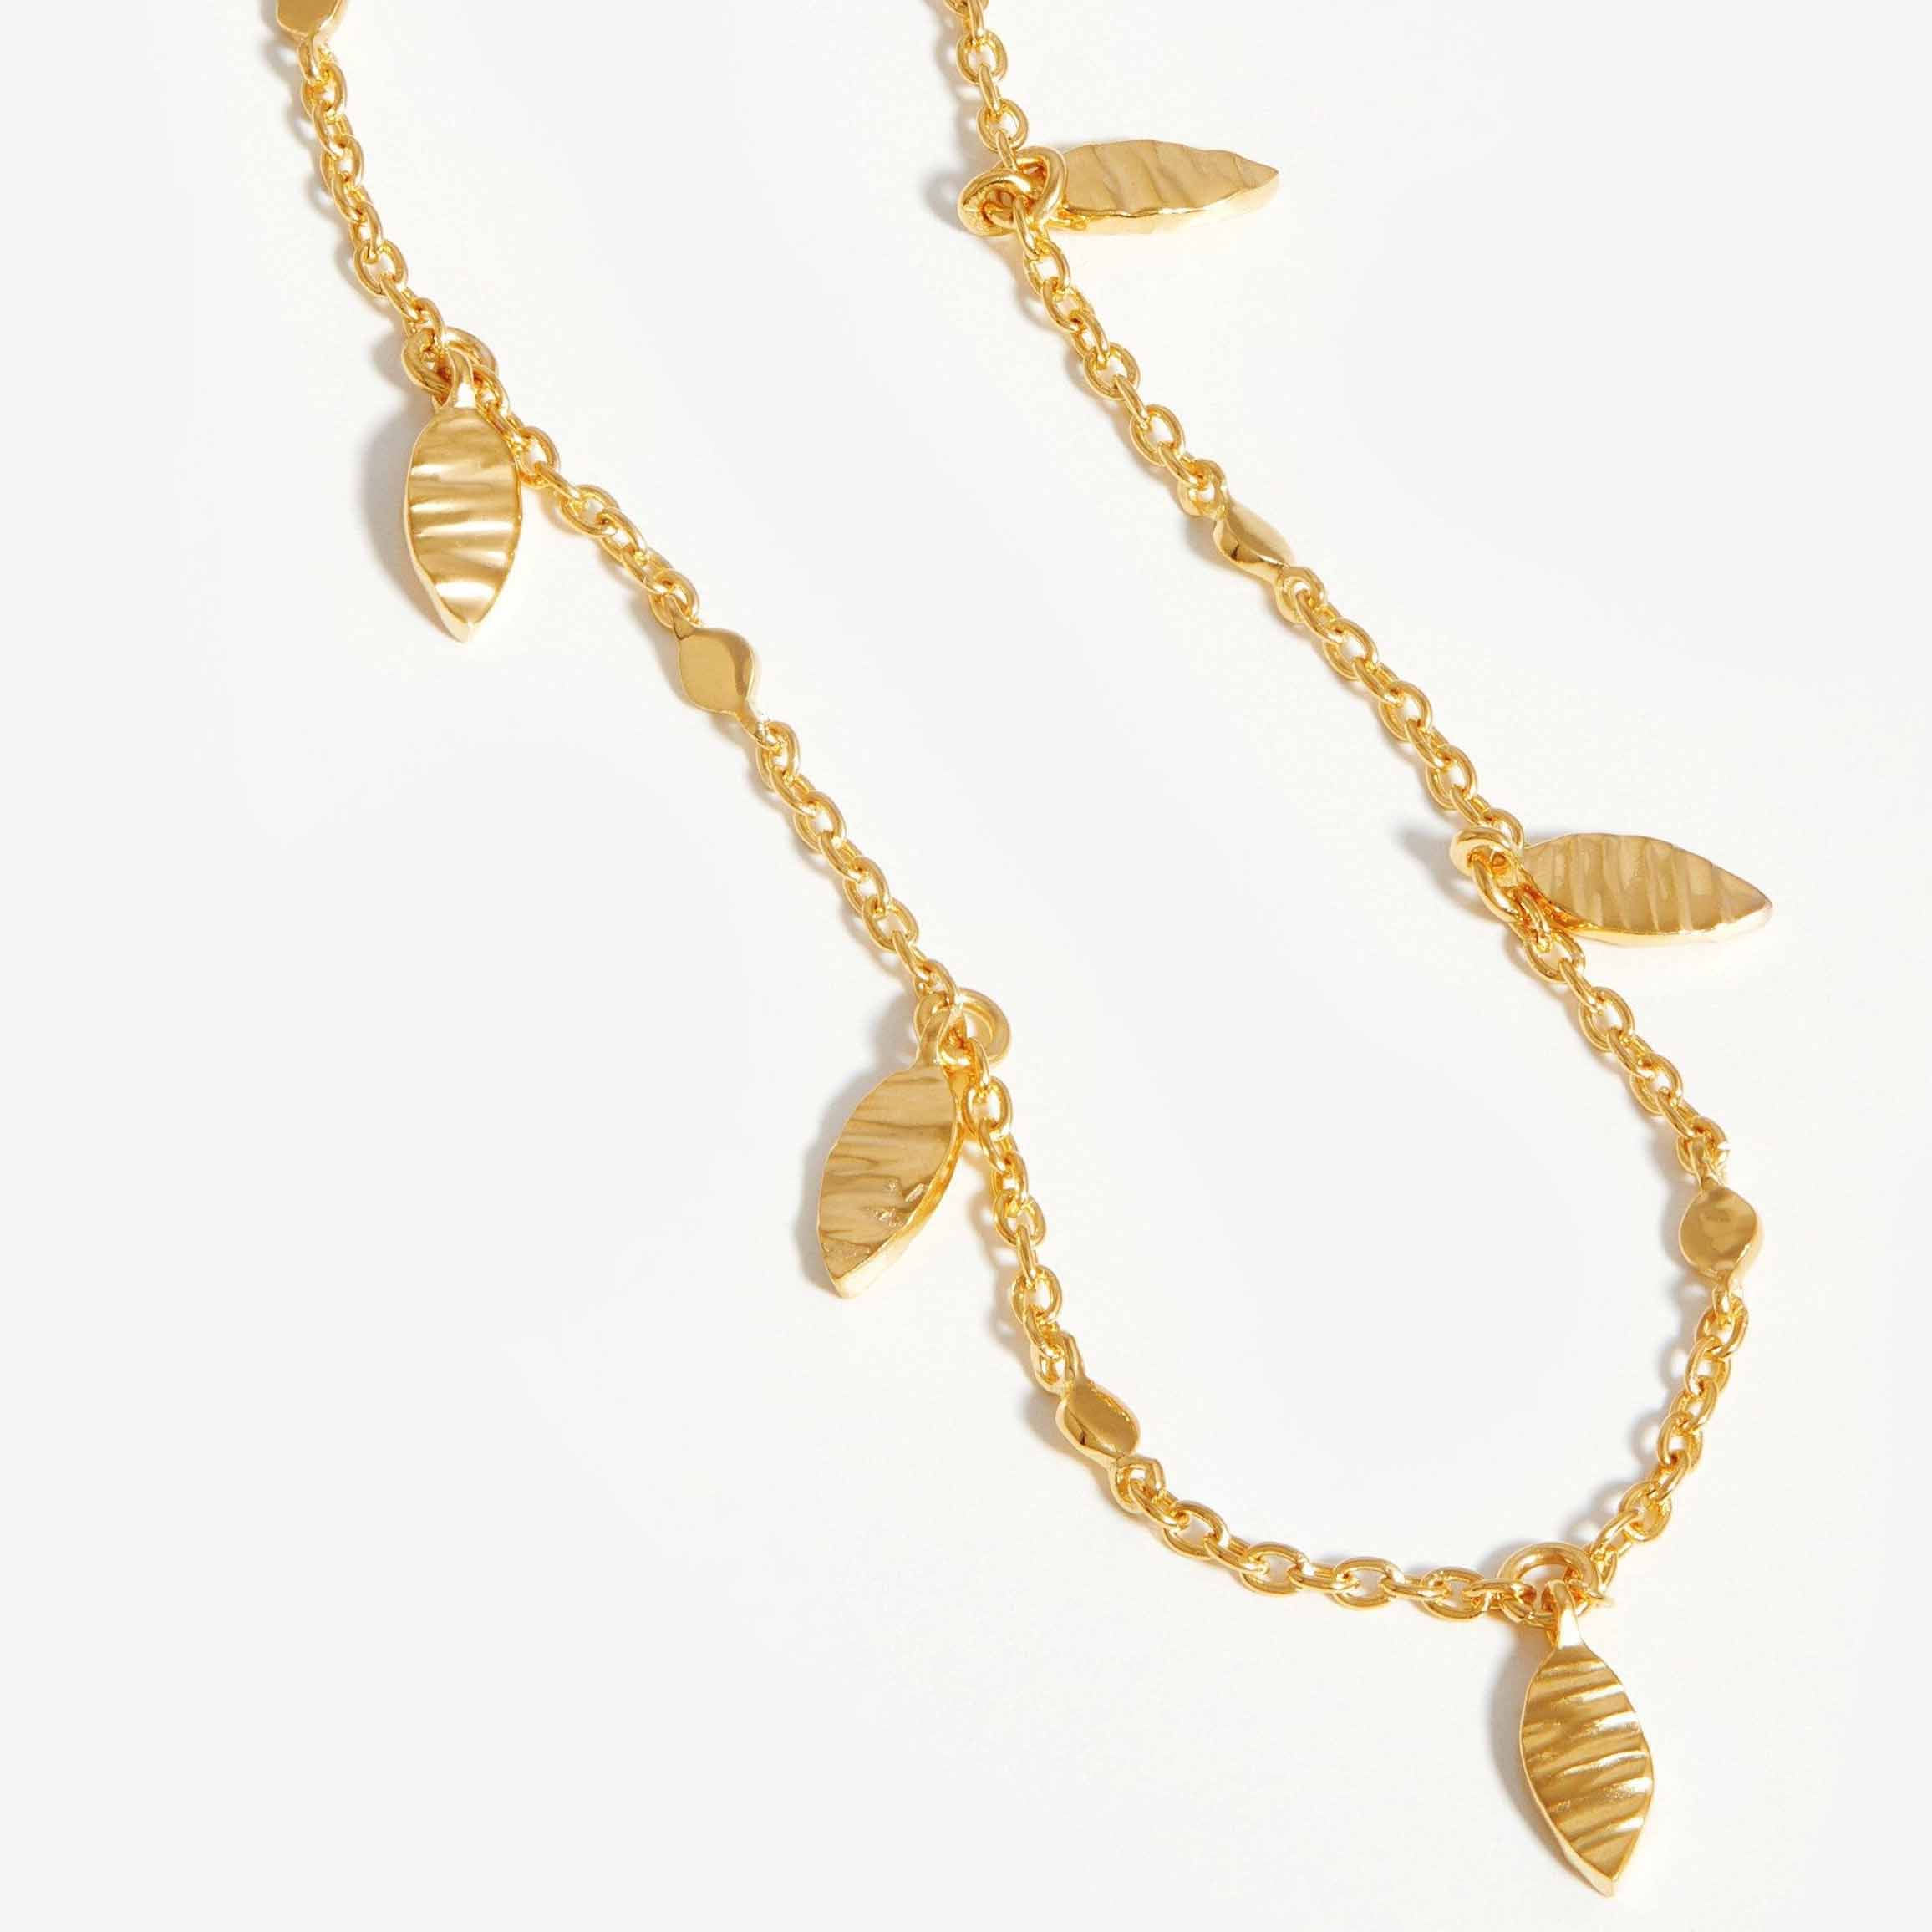 Custom jewelry design leaf charm choker necklaces in 18k gold vermeil